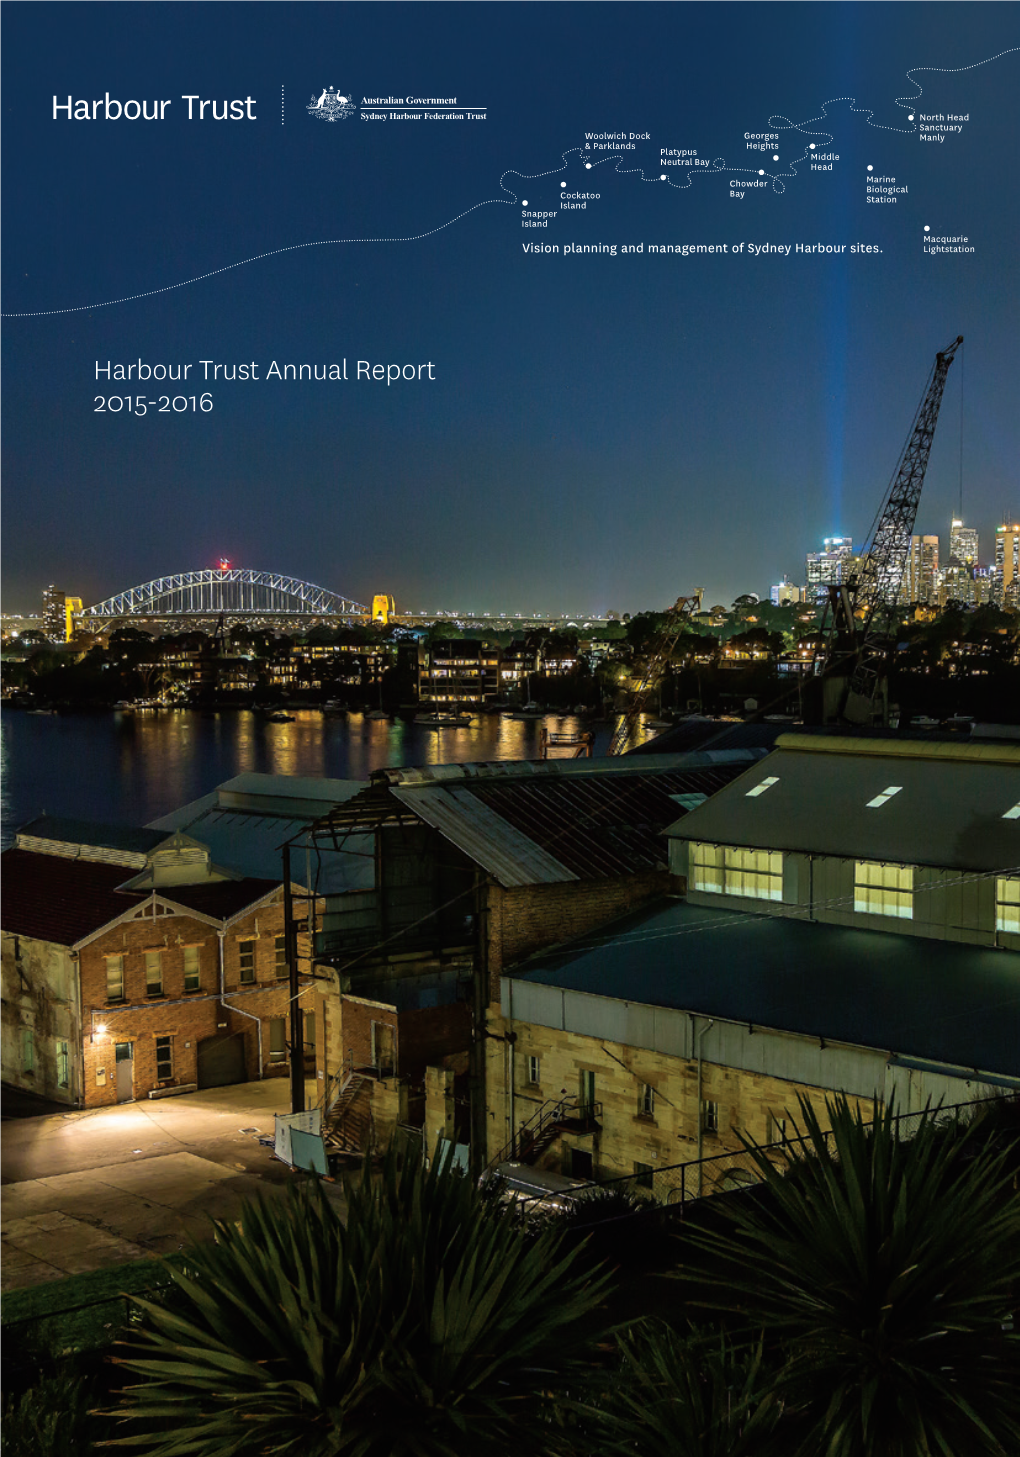 Sydney Harbour Federation Trust Annual Report 2015-2016